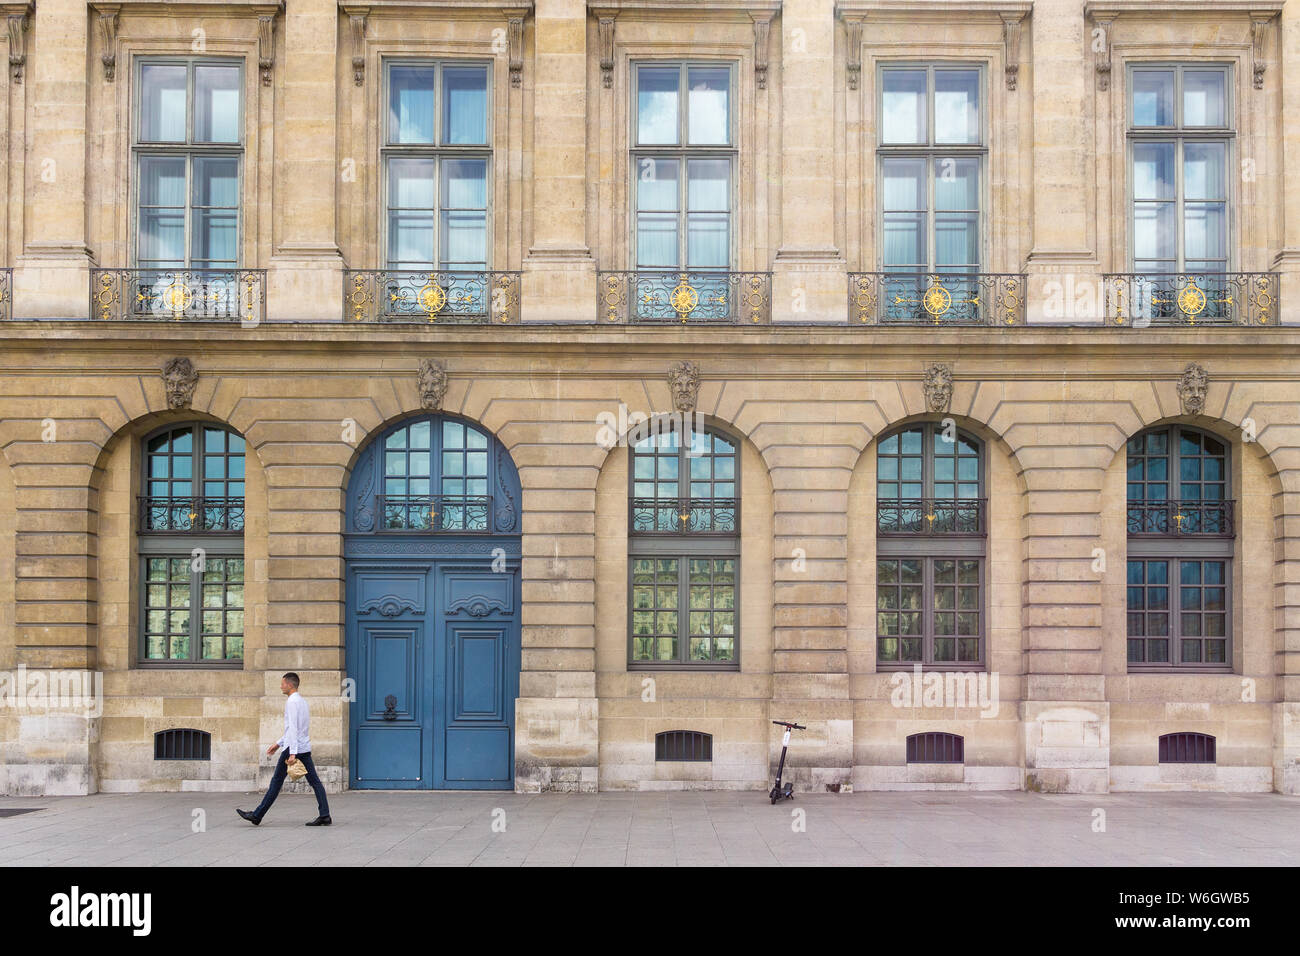 Paris building - a man walking in Place Vendome in the 1st arrondissement of Paris, France, Europe. Stock Photo